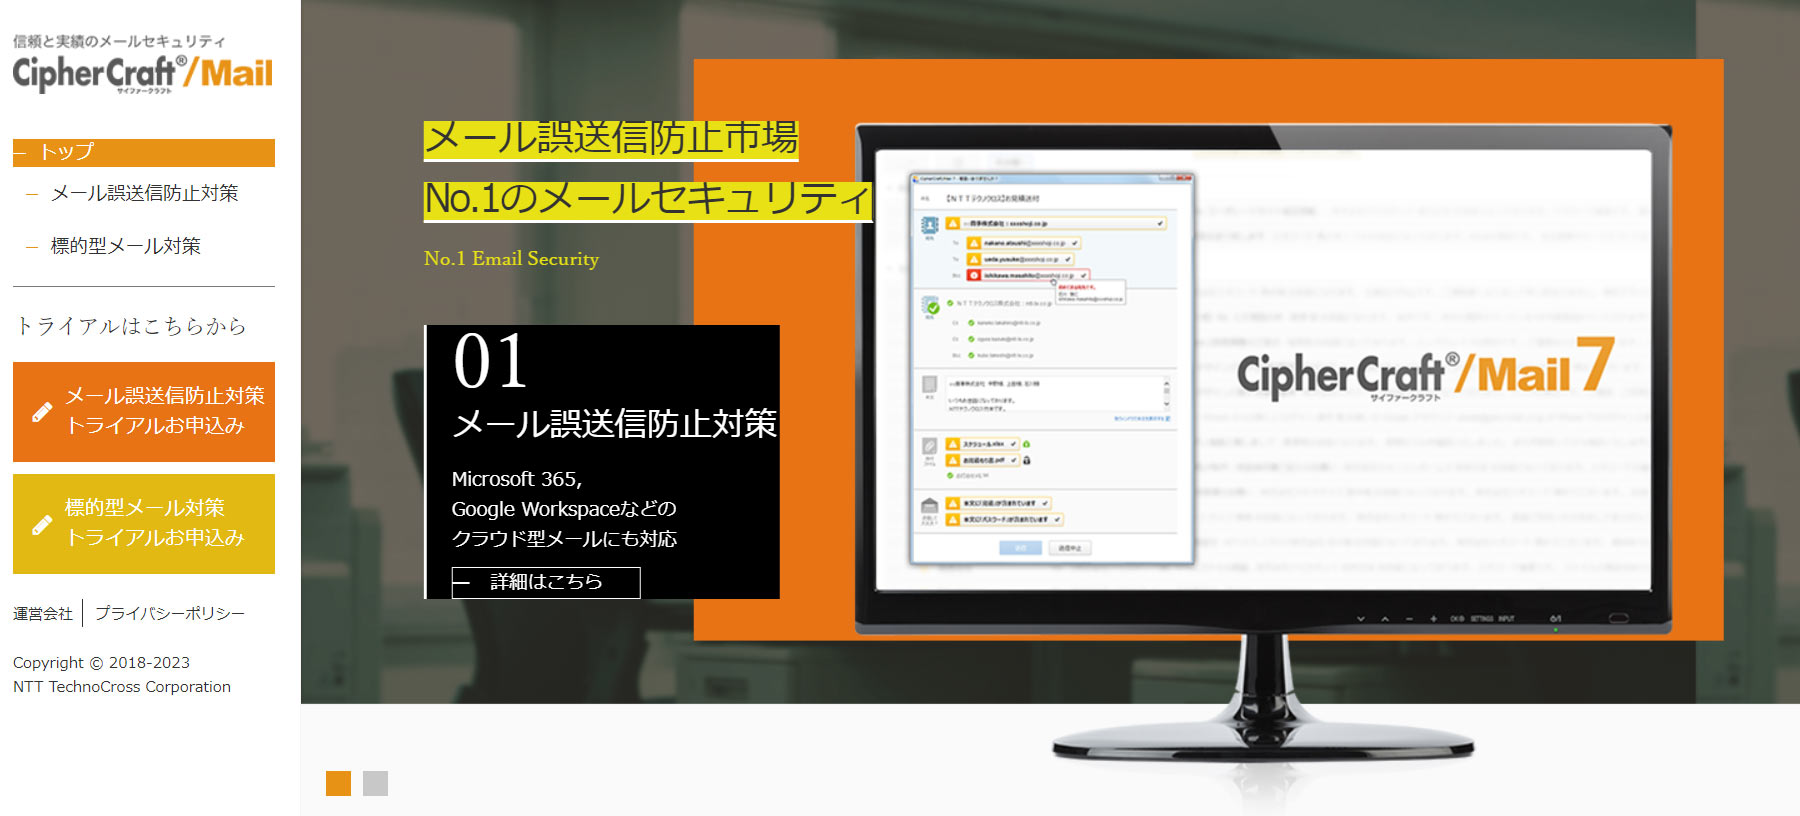 CipherCraft/Mail公式Webサイト